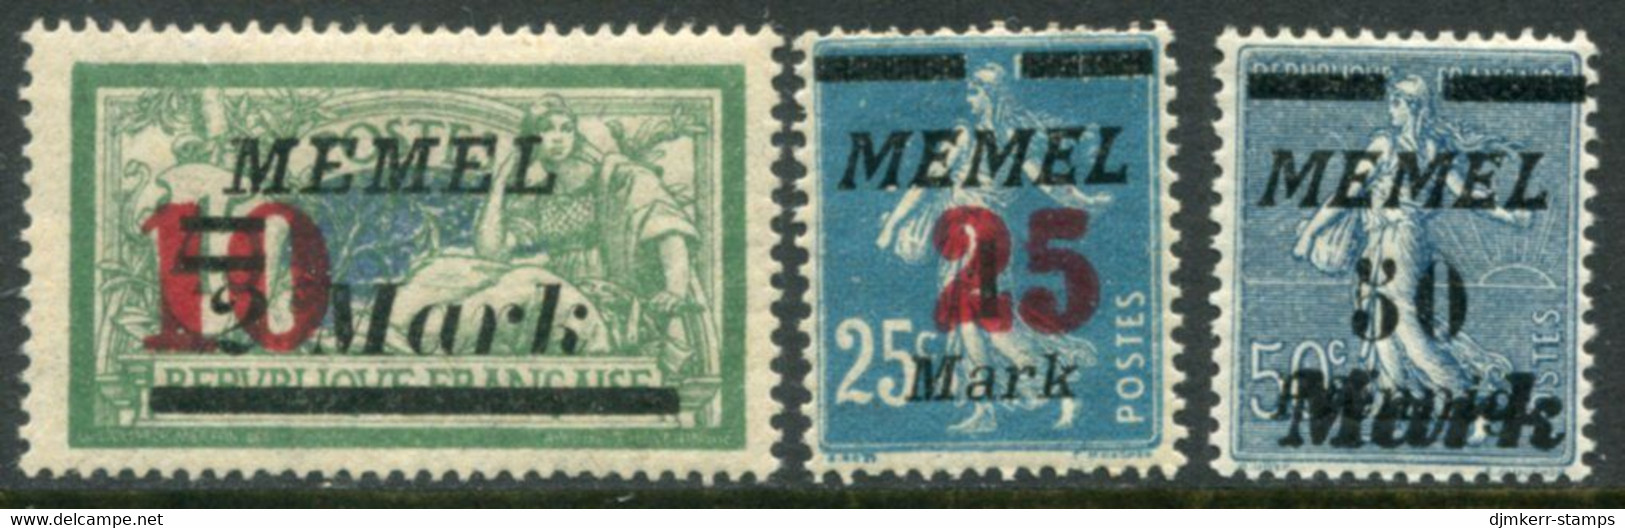 MEMEL  (Lithanian Occ.) 1923 Overprints On France LHM / *.  Michel 121-23 - Memel (Klaipeda) 1923